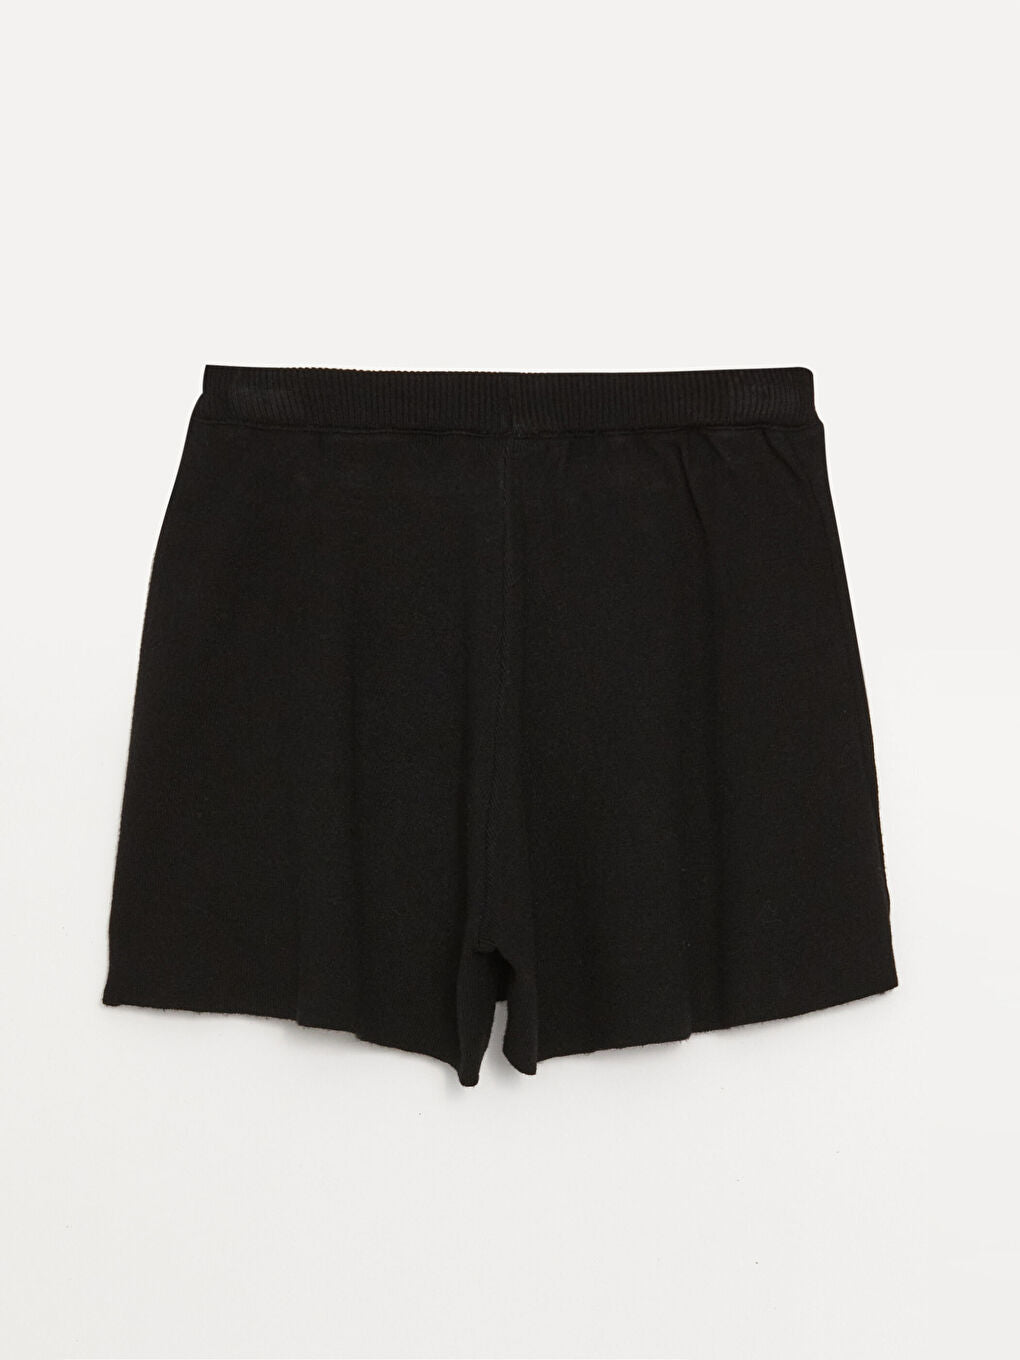 Basic Girls Shorts Skirt With Elastic Waist